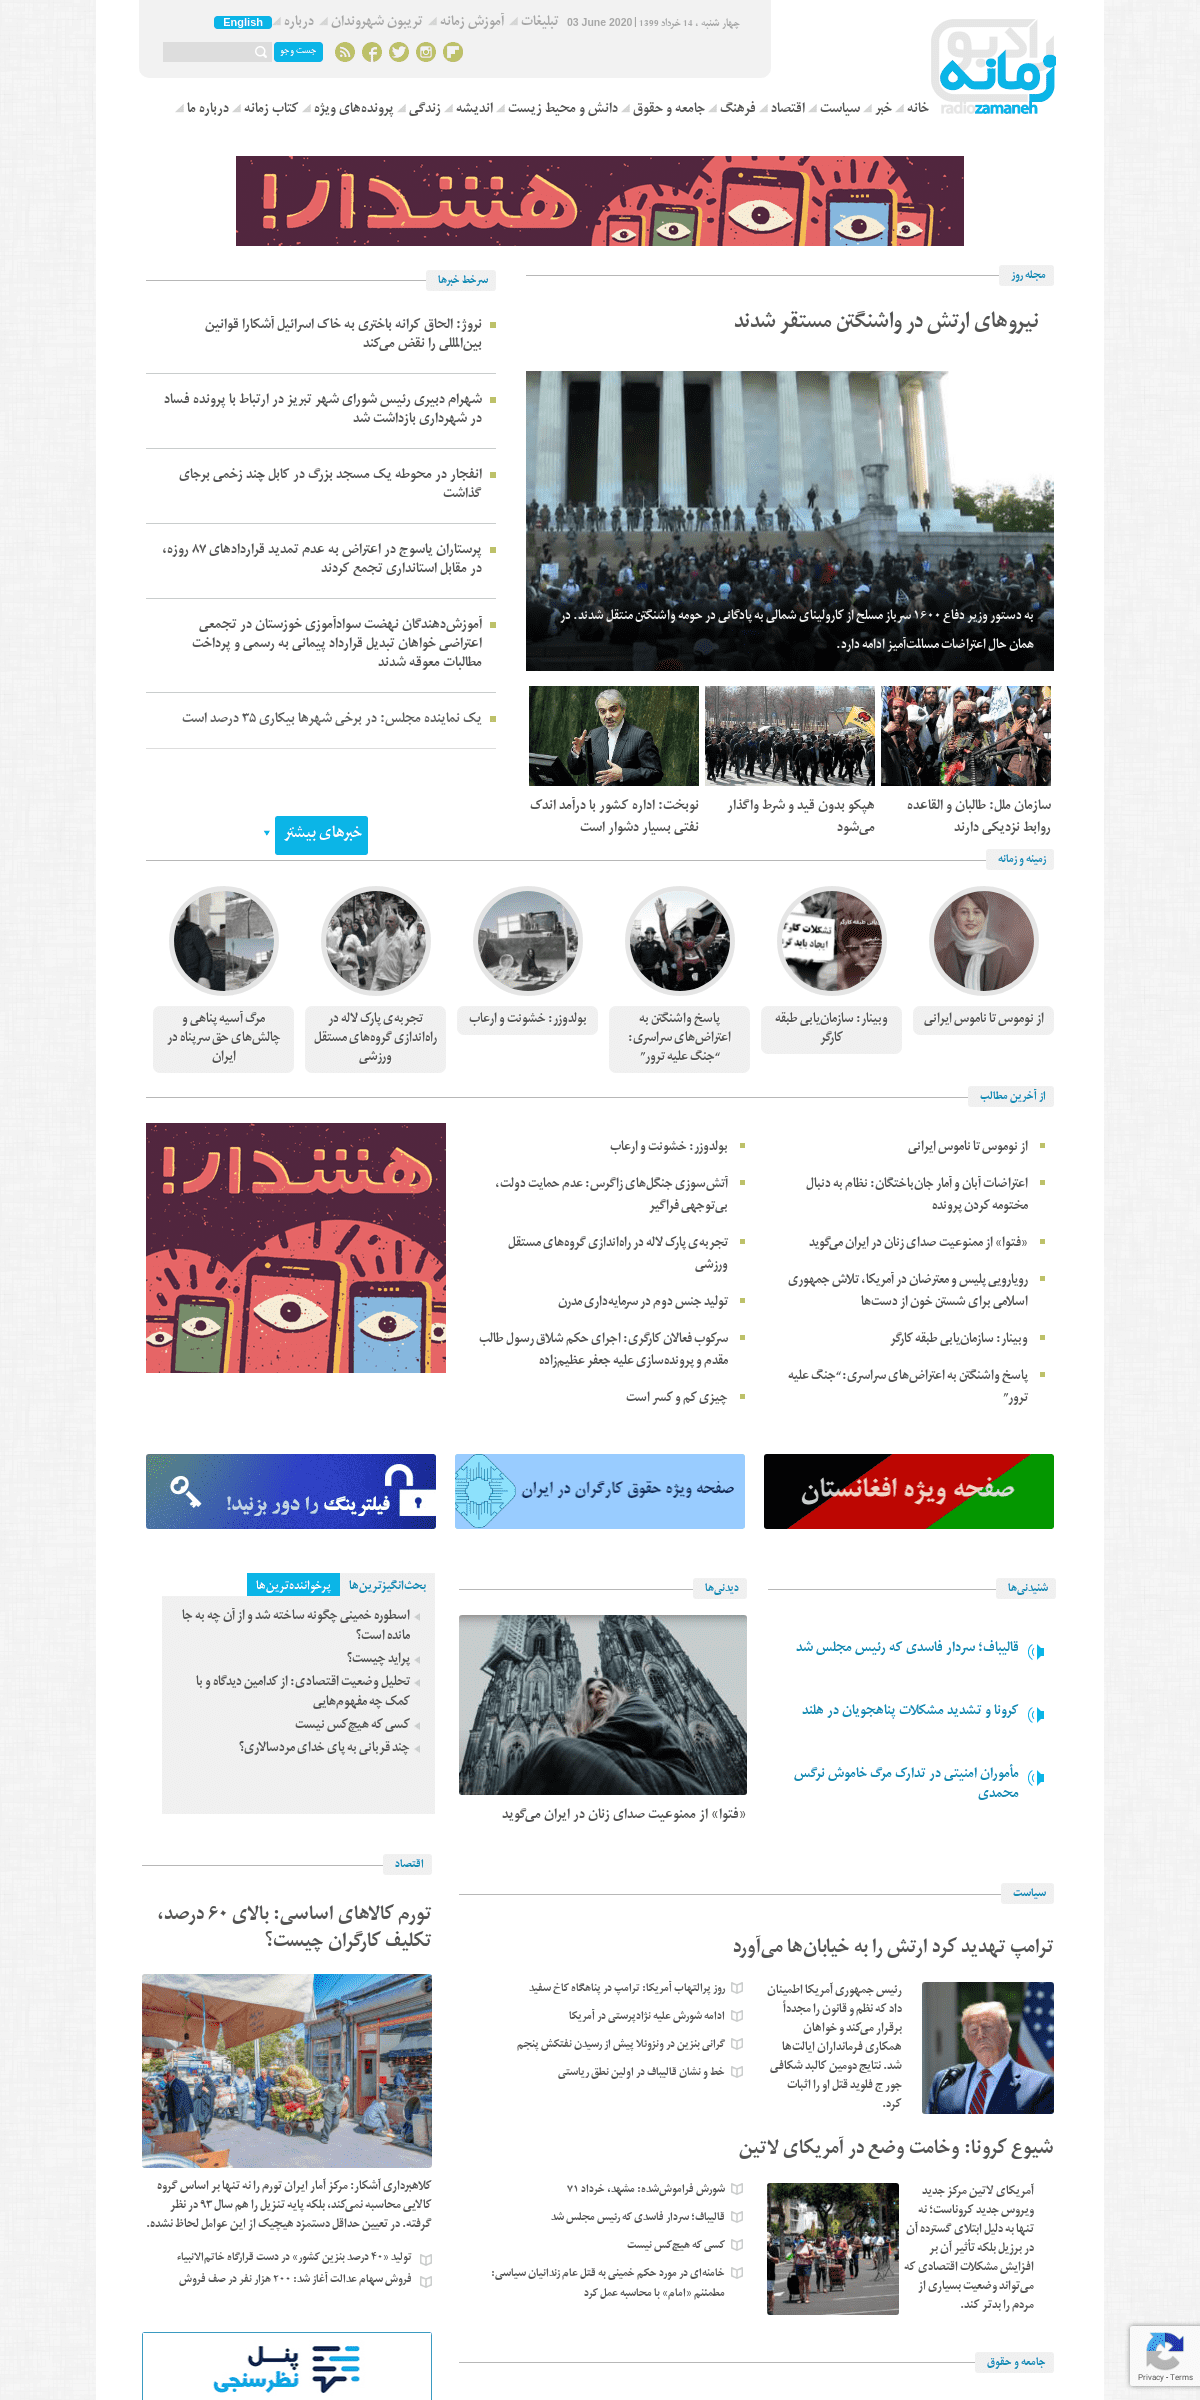 A complete backup of radiozamaneh.com